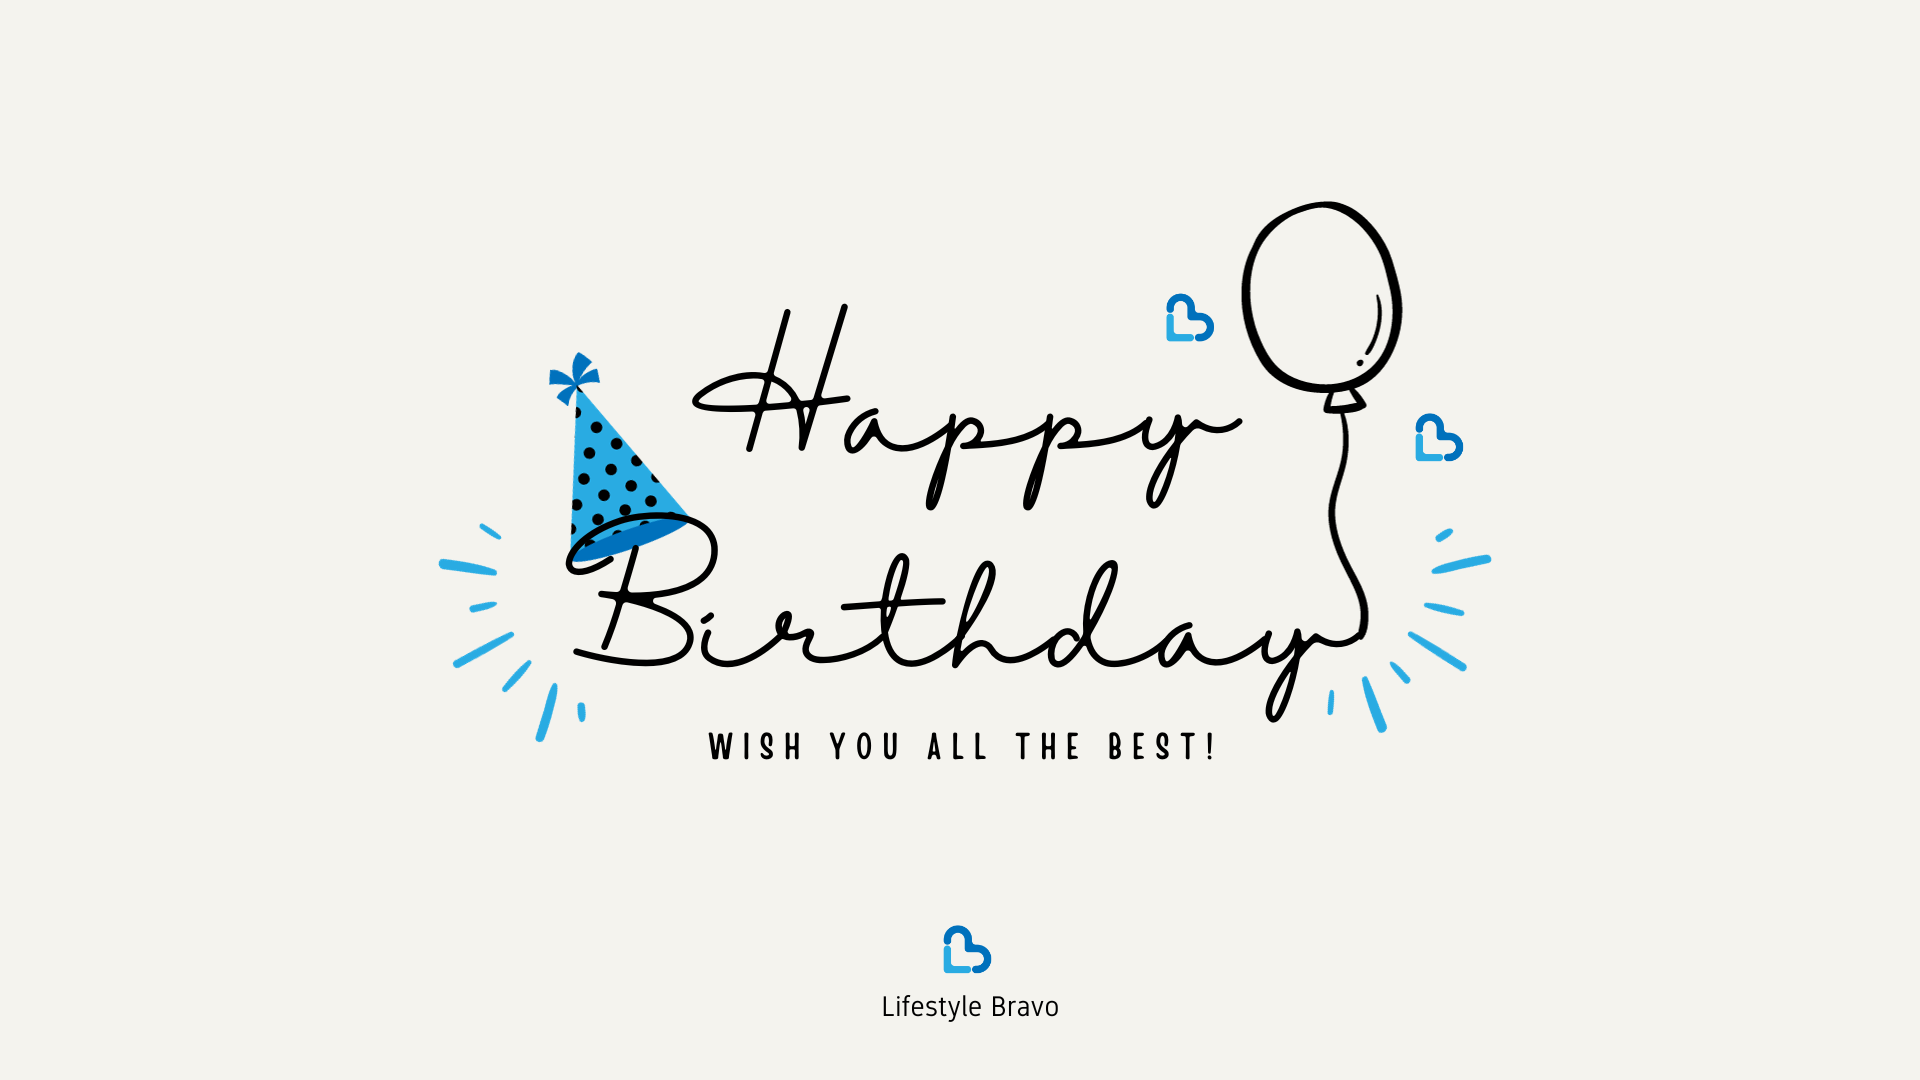 Happy Birthday e-gift card - Lifestyle Bravo